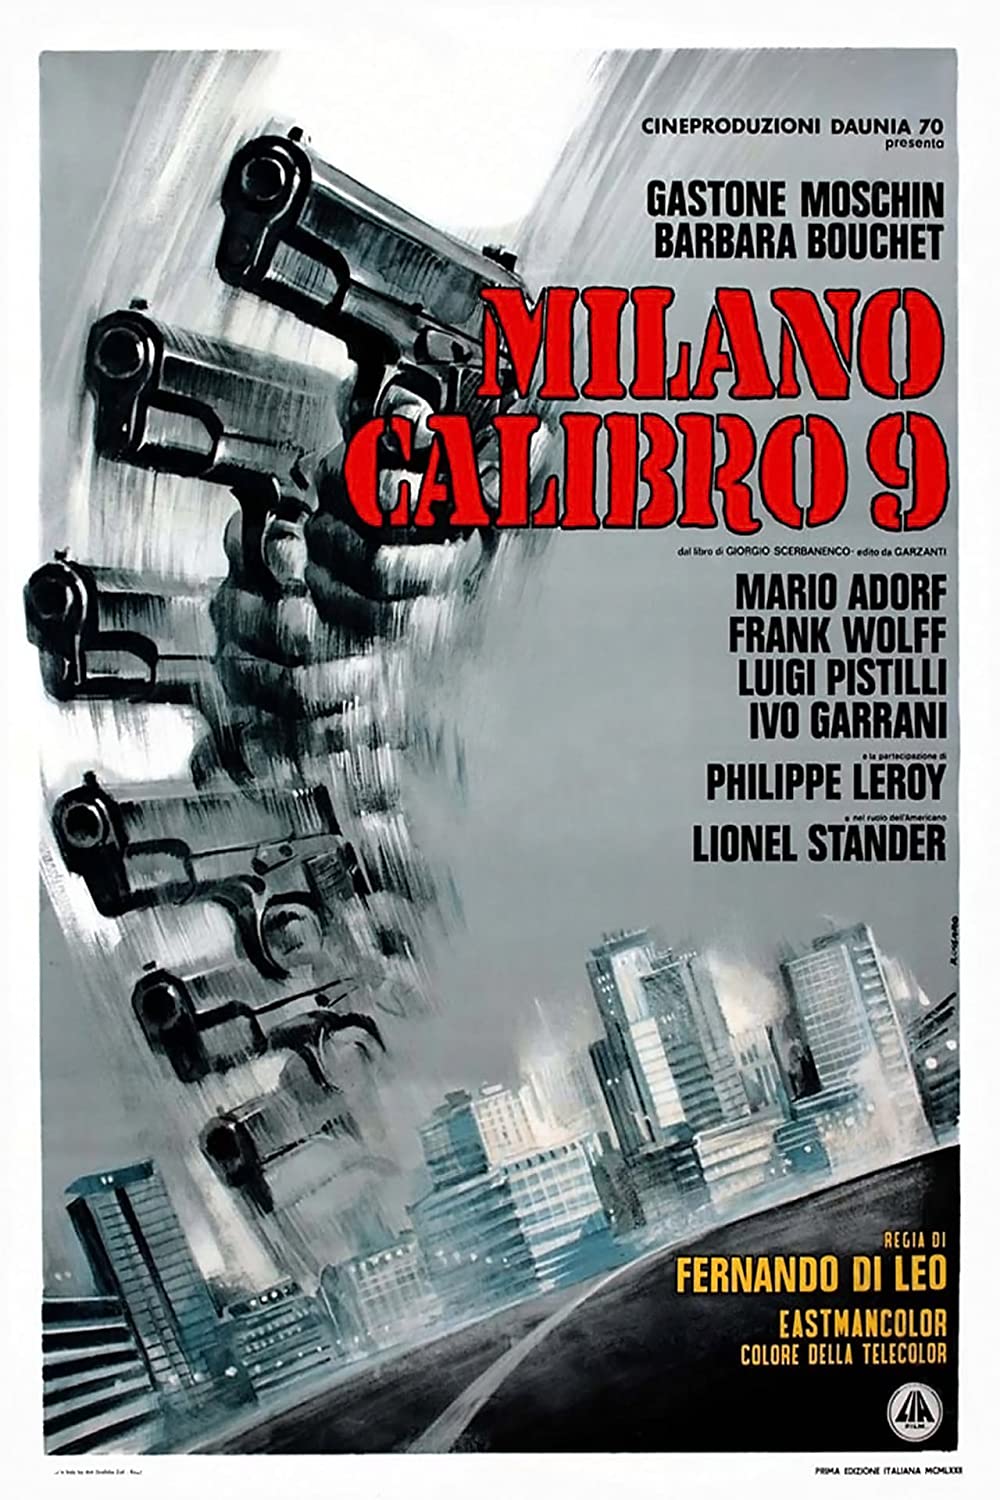 Filmbeschreibung zu Milano Kaliber 9